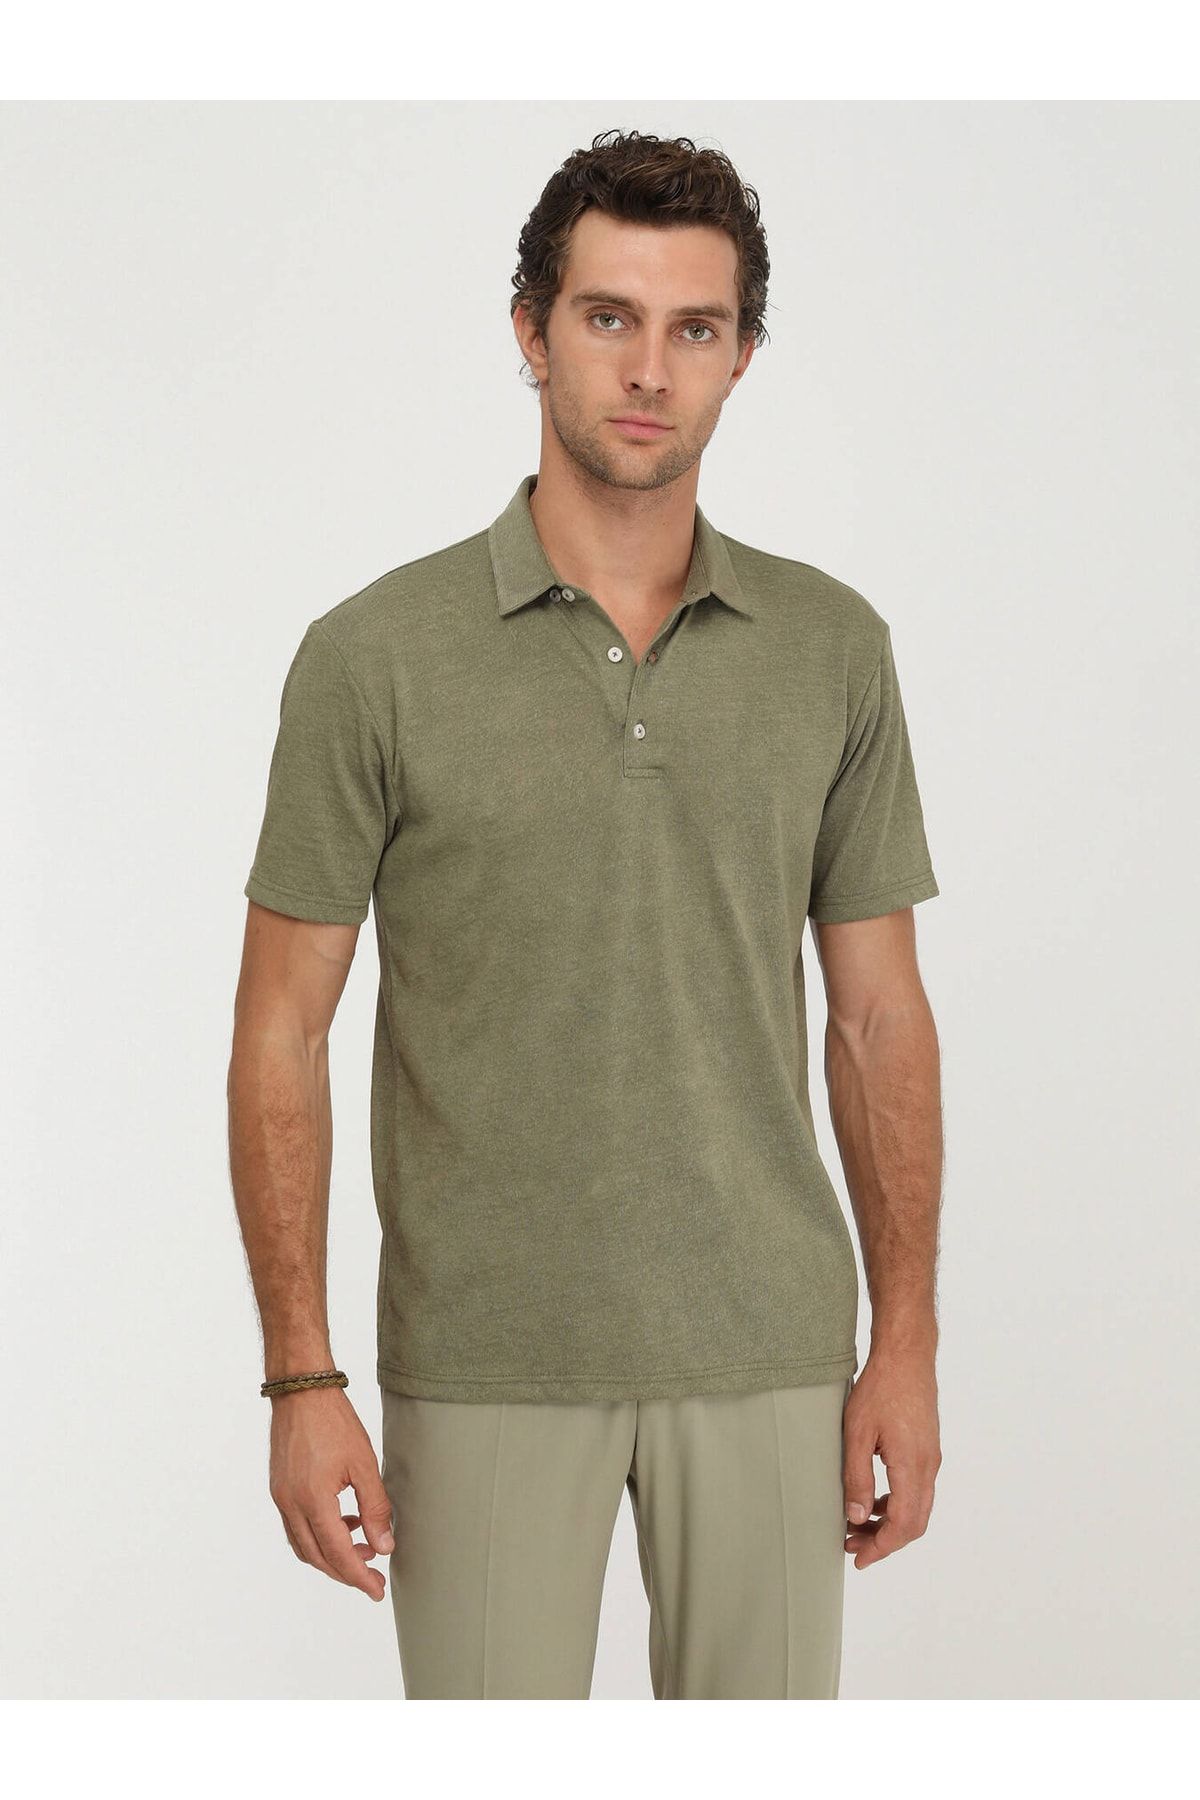 Kip Yağ Yeşili Düz Polo Yaka Pamuk Karışımlı T-shirt